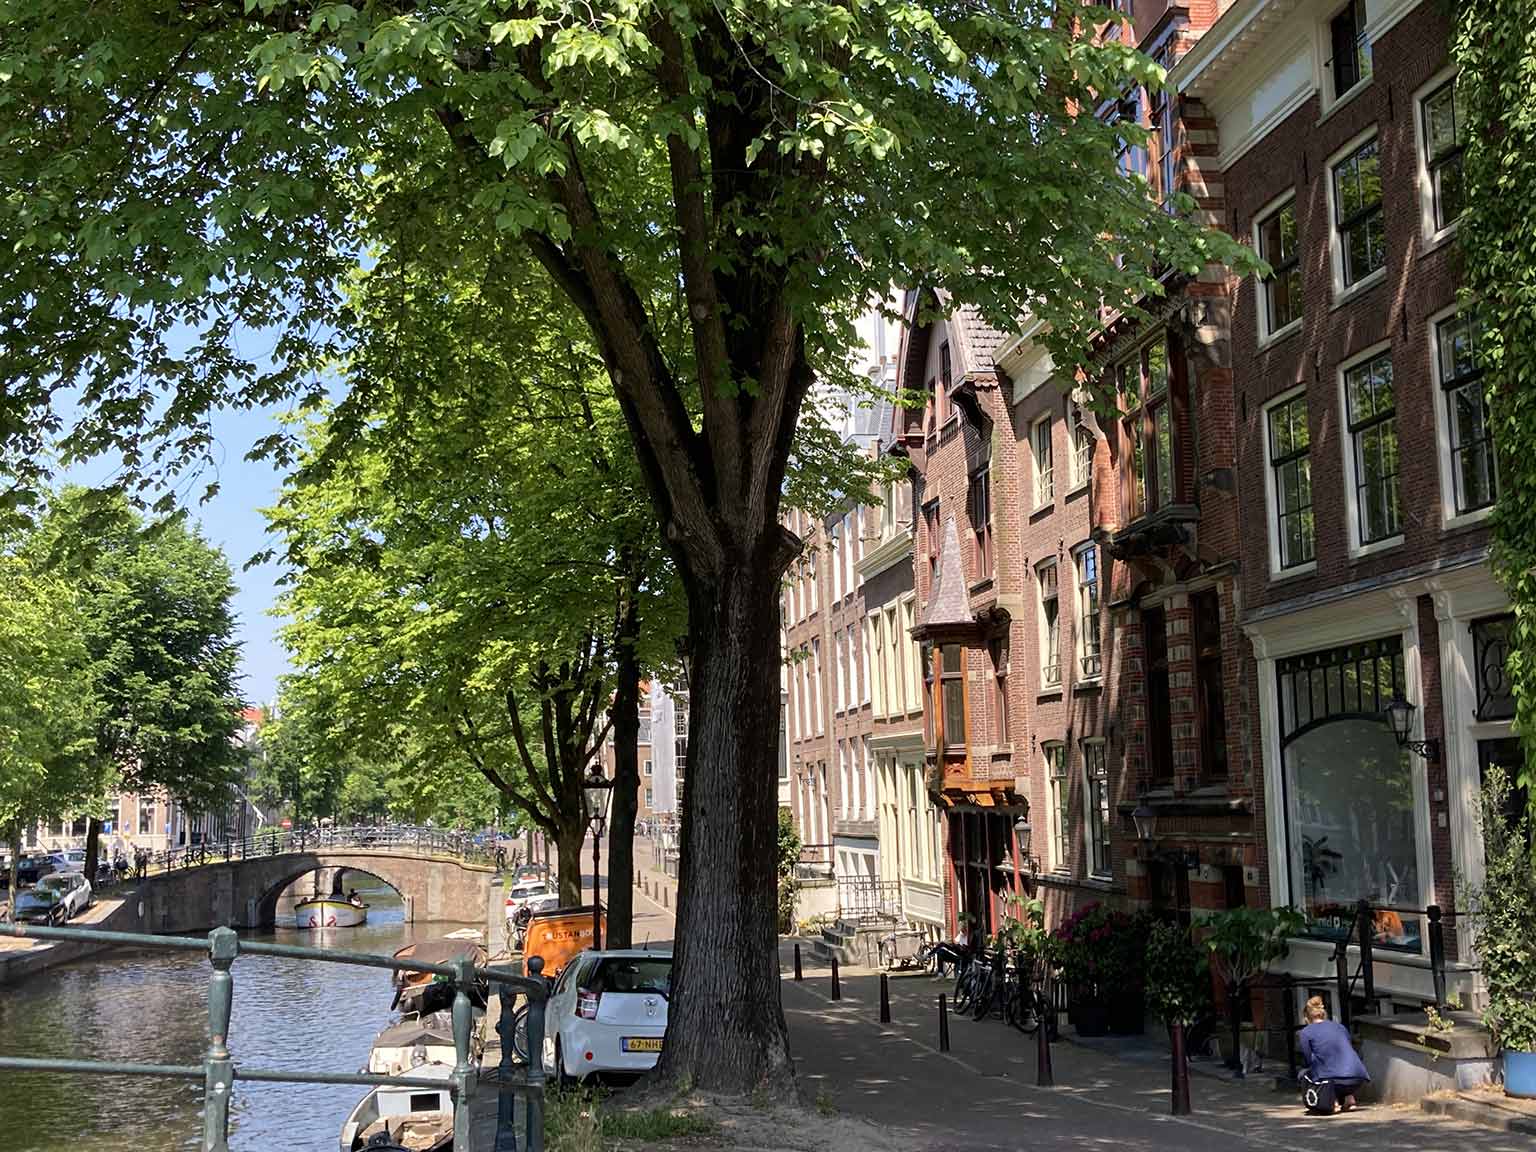 Reguliersgracht, Amsterdam, looking towards Keizersgracht